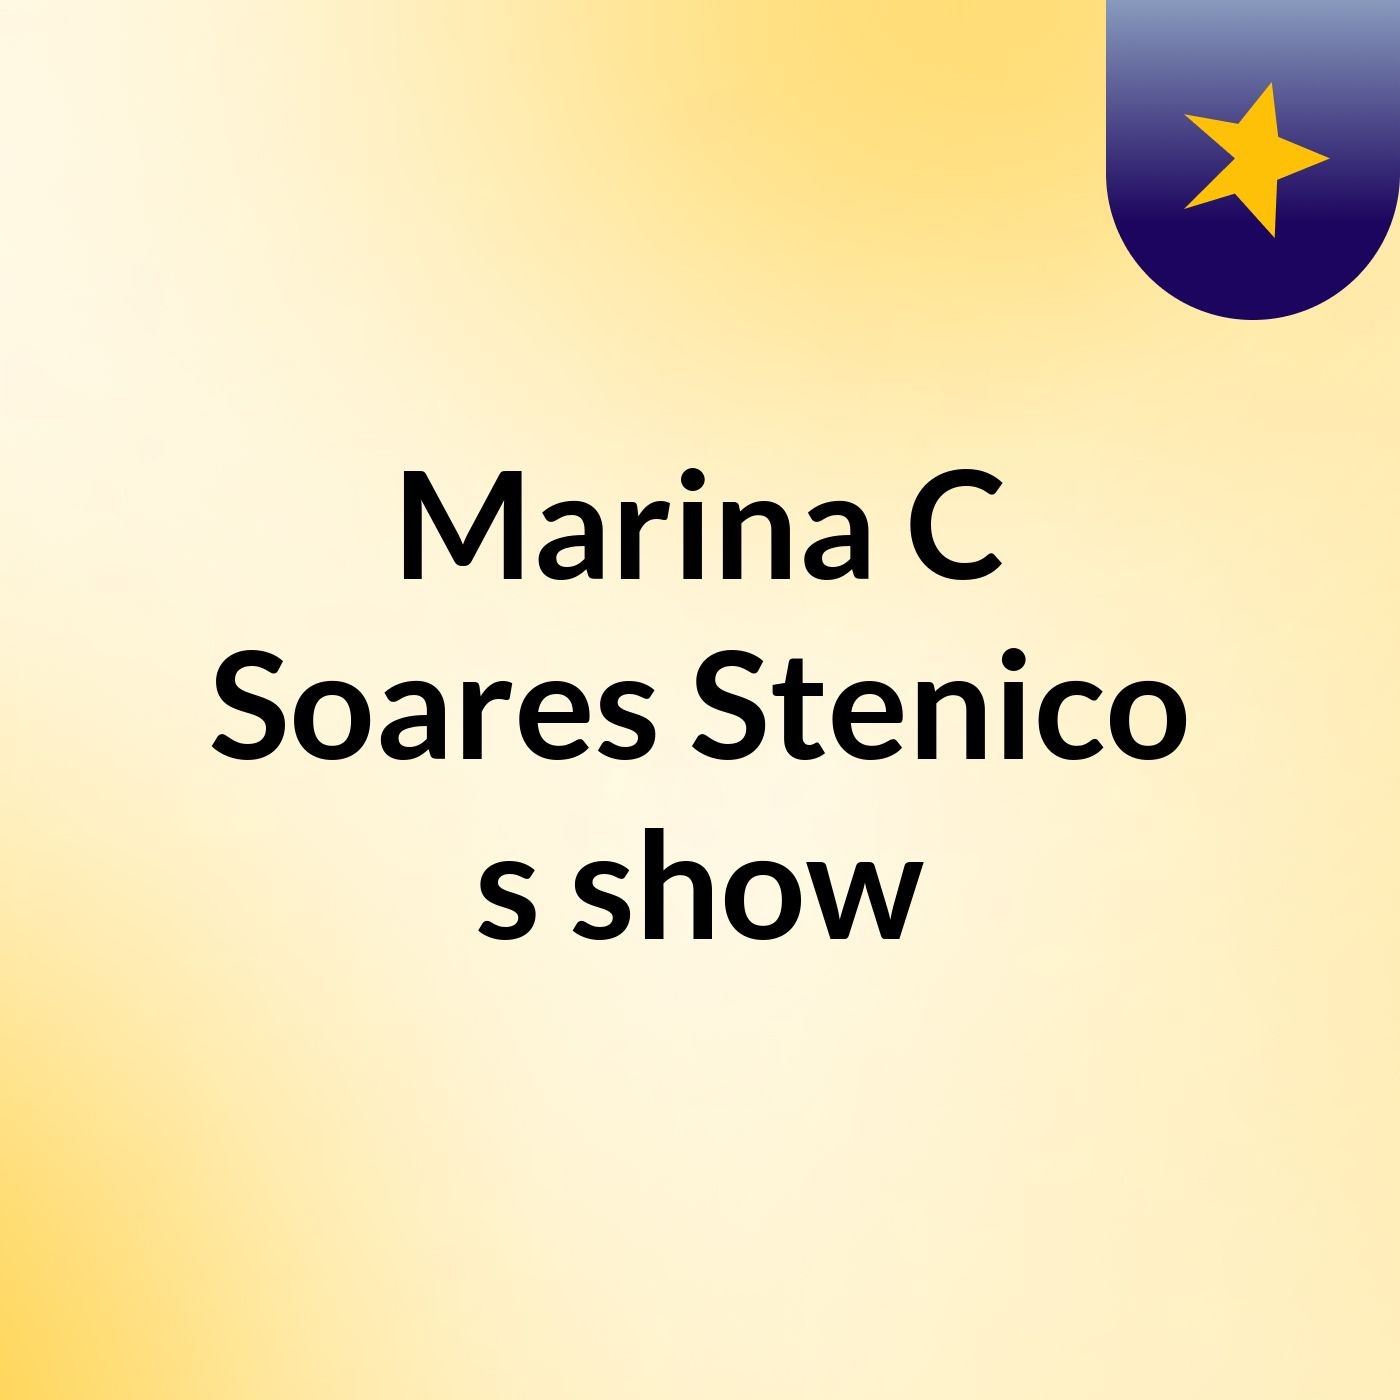 Marina C Soares Stenico's show